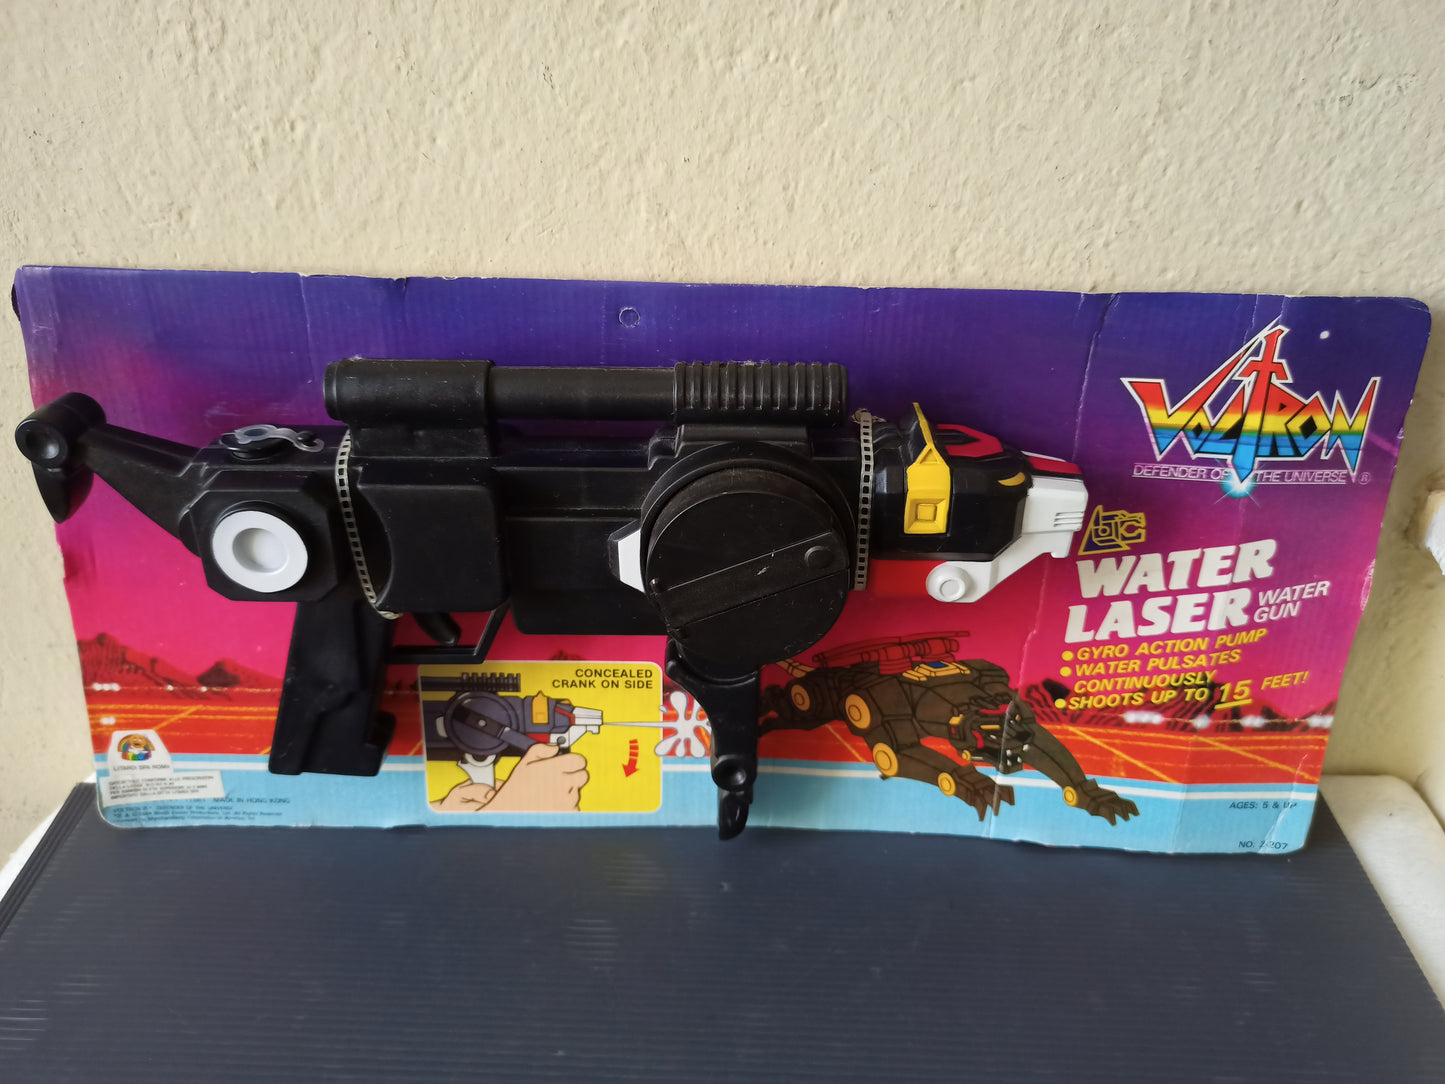 Water Laser Water Gun Voltron, Litardi originale 1984